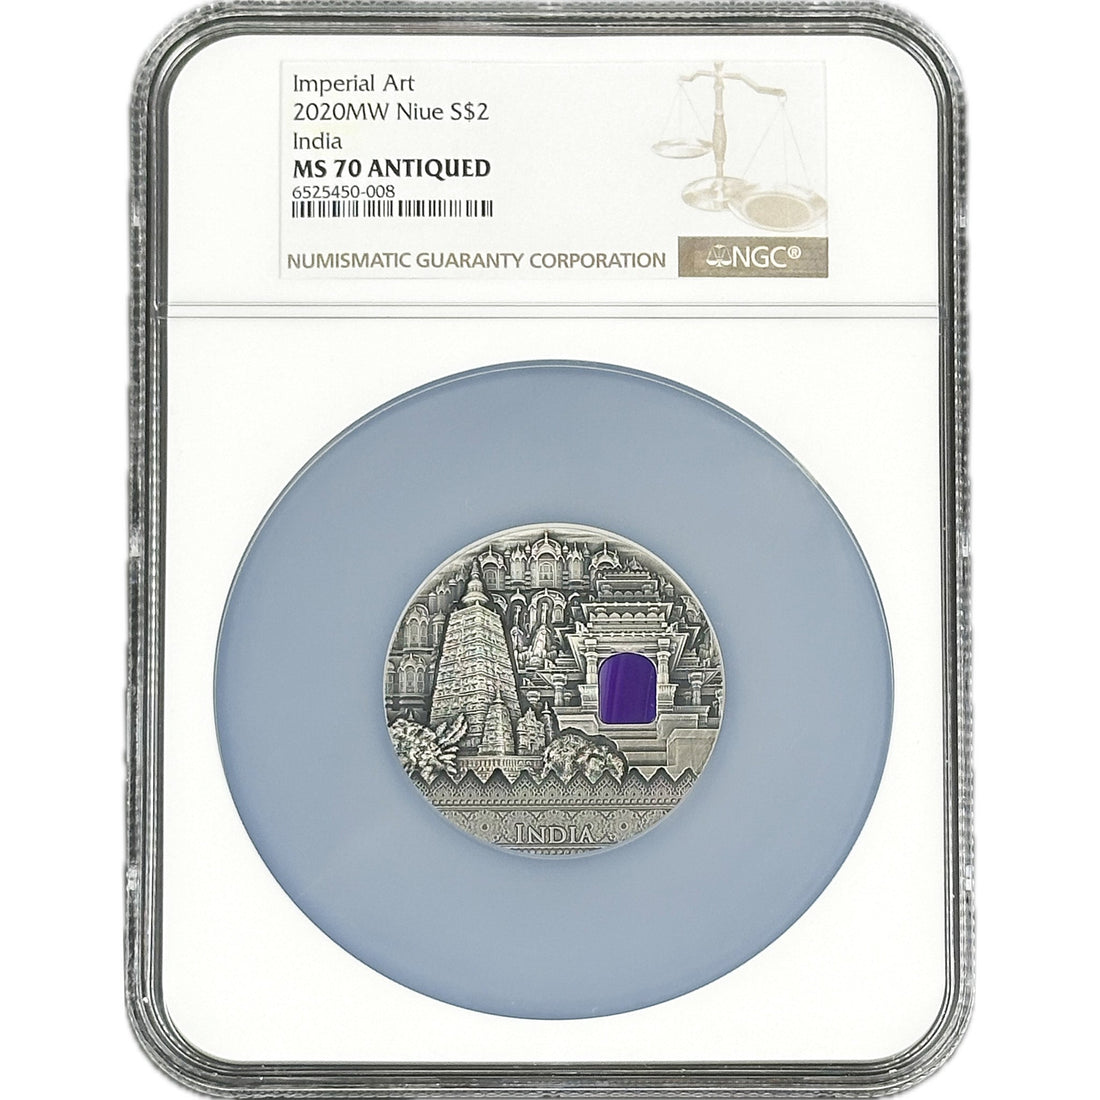 2020 2 oz INDIA Silver Coin MS 70 Imperial Art - Niue - Oz Bullion